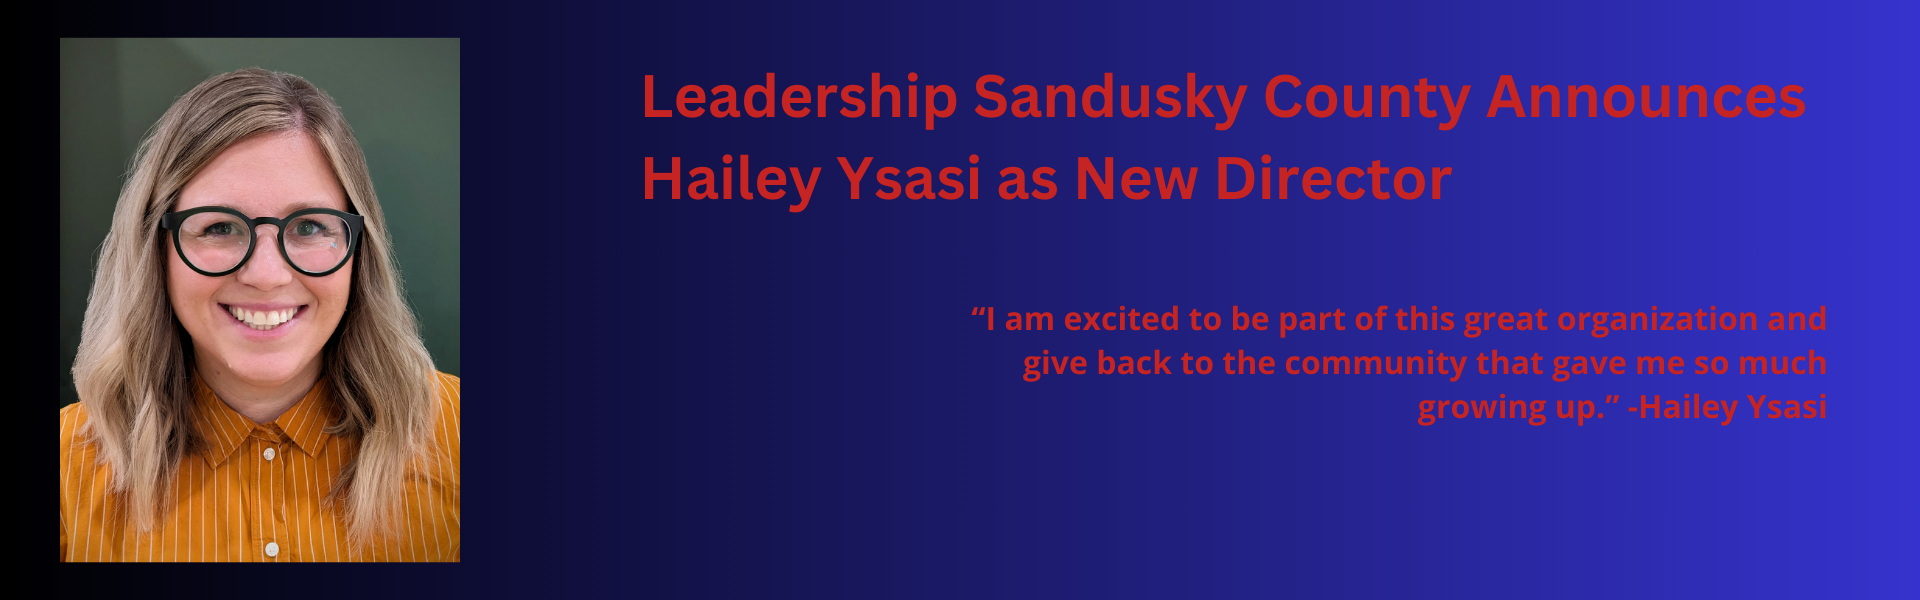 Hailey Ysasi new director of Leadership Sandusky County